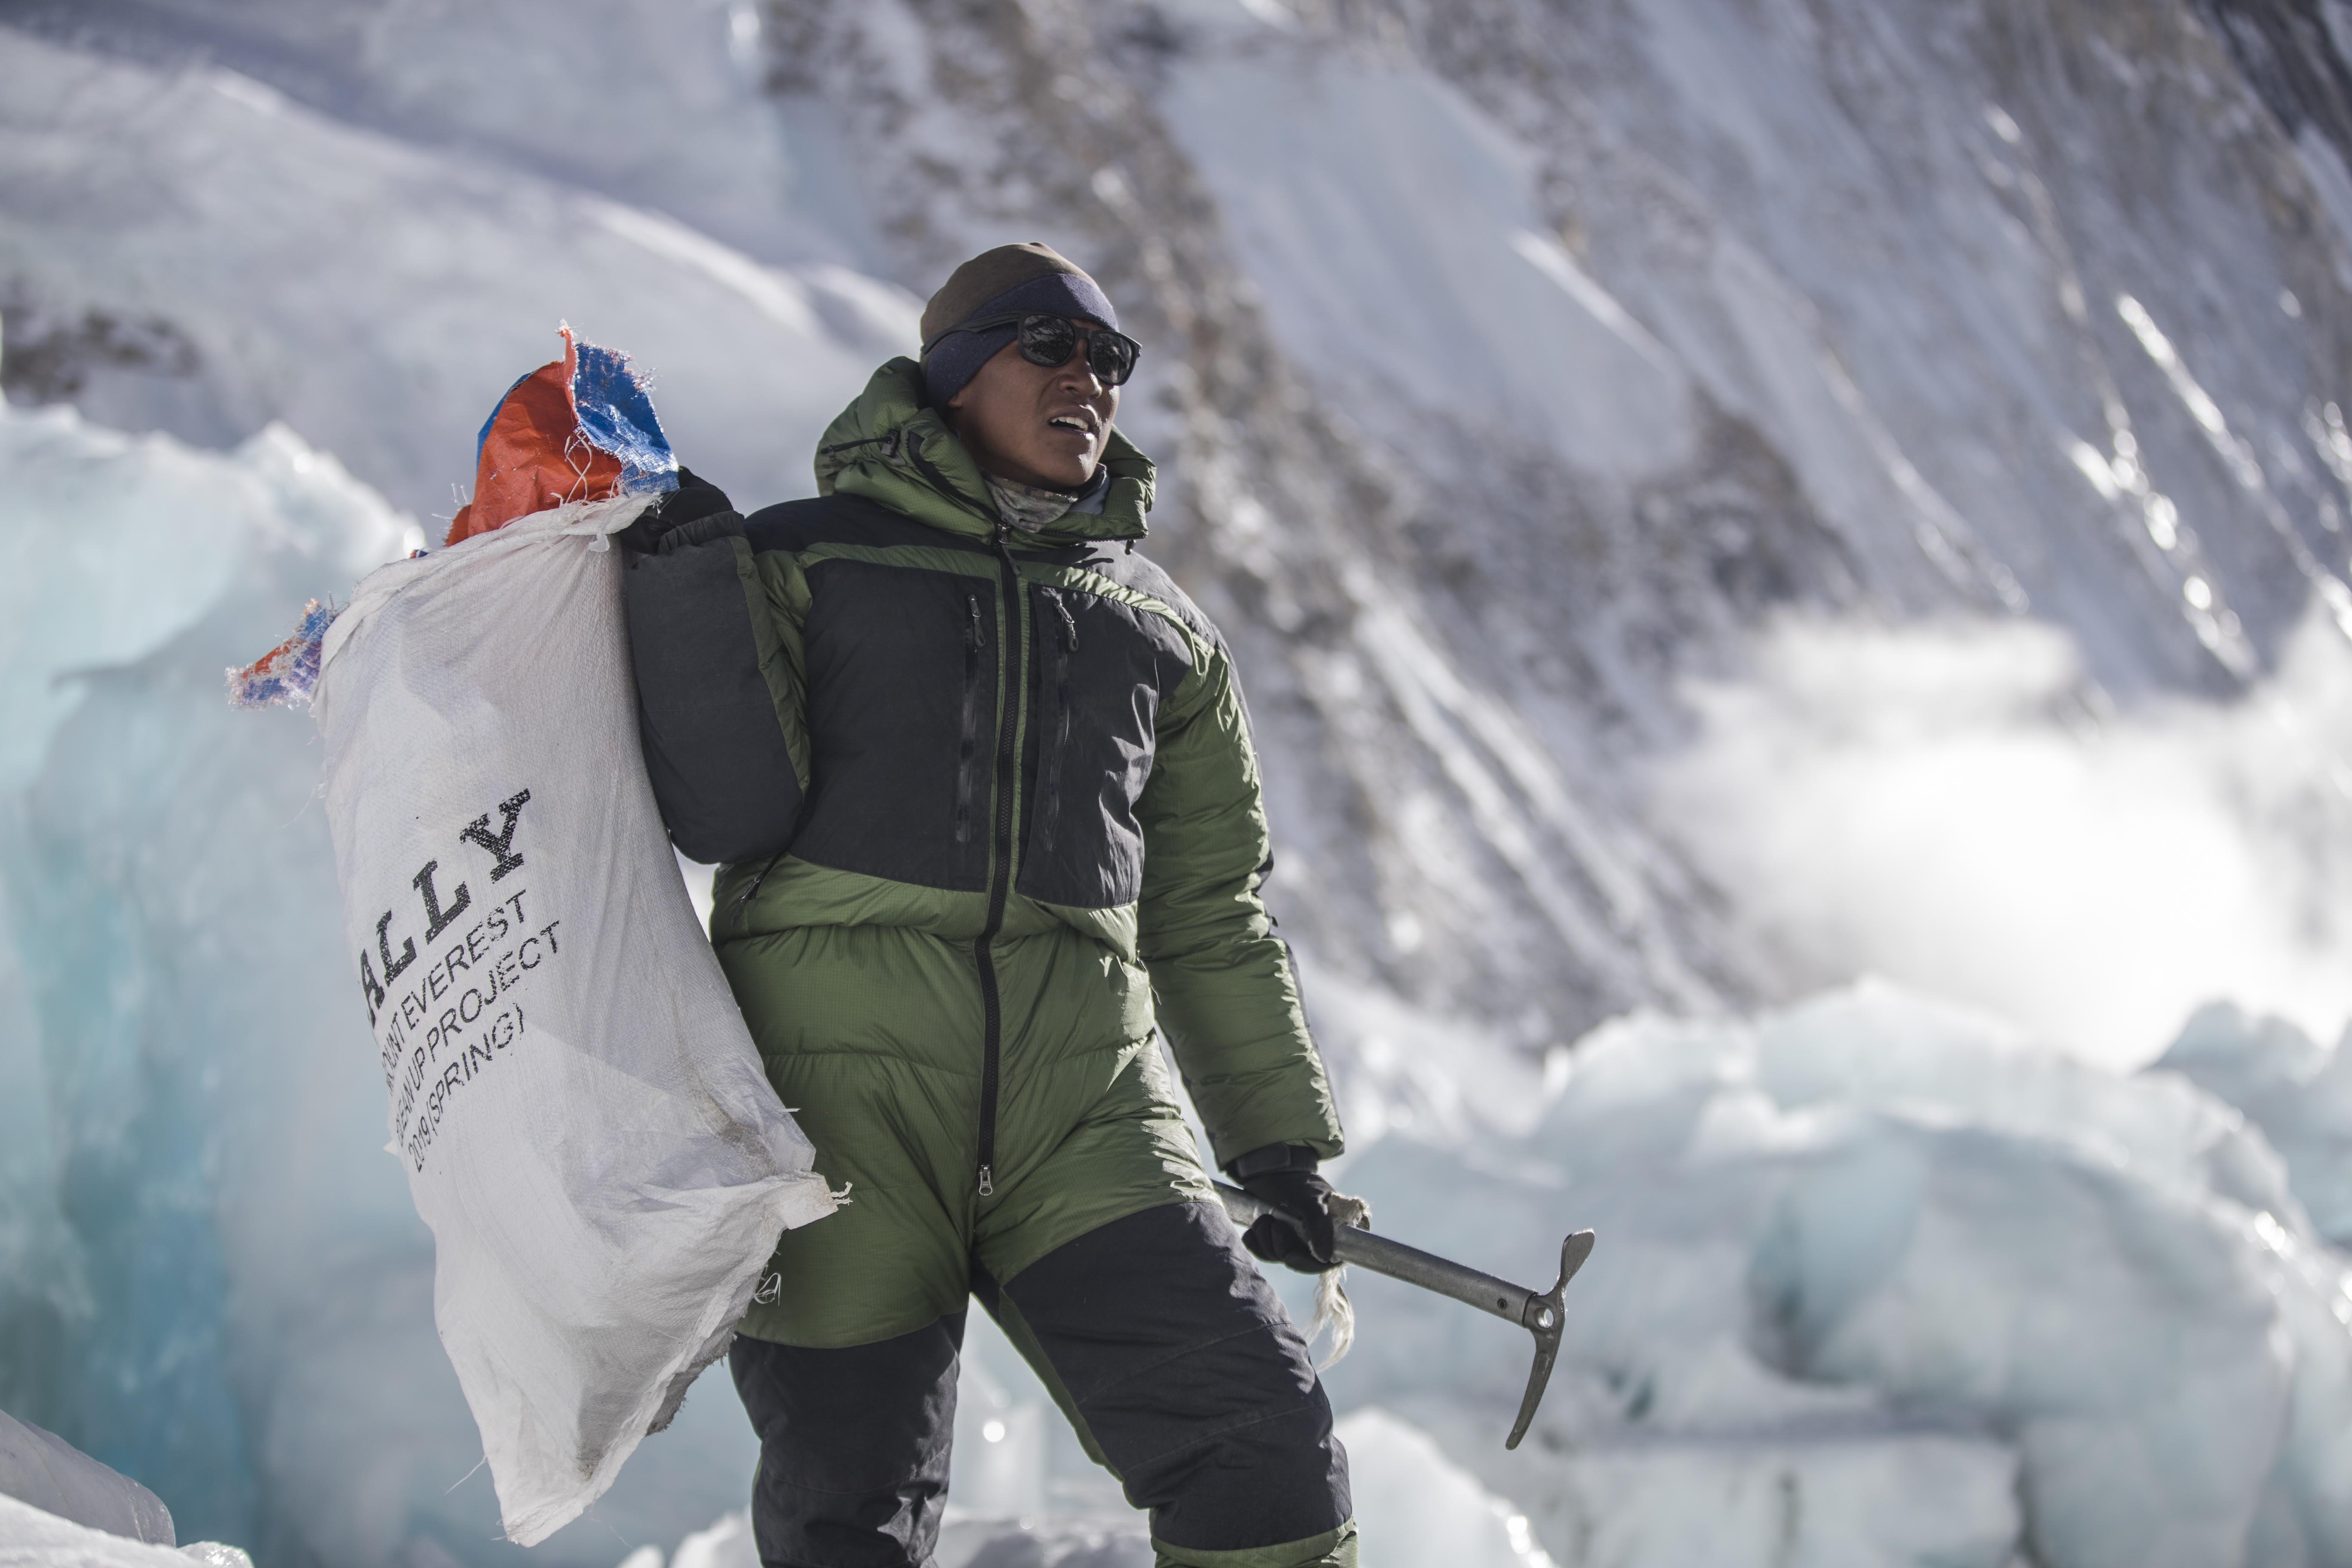 Peak Outlookプロジェクト スイスラグジュアリーブランド バリーがエベレストの環境保全を目指した廃棄物回収活動をスタート 株式会社バリー ジャパンのプレスリリース